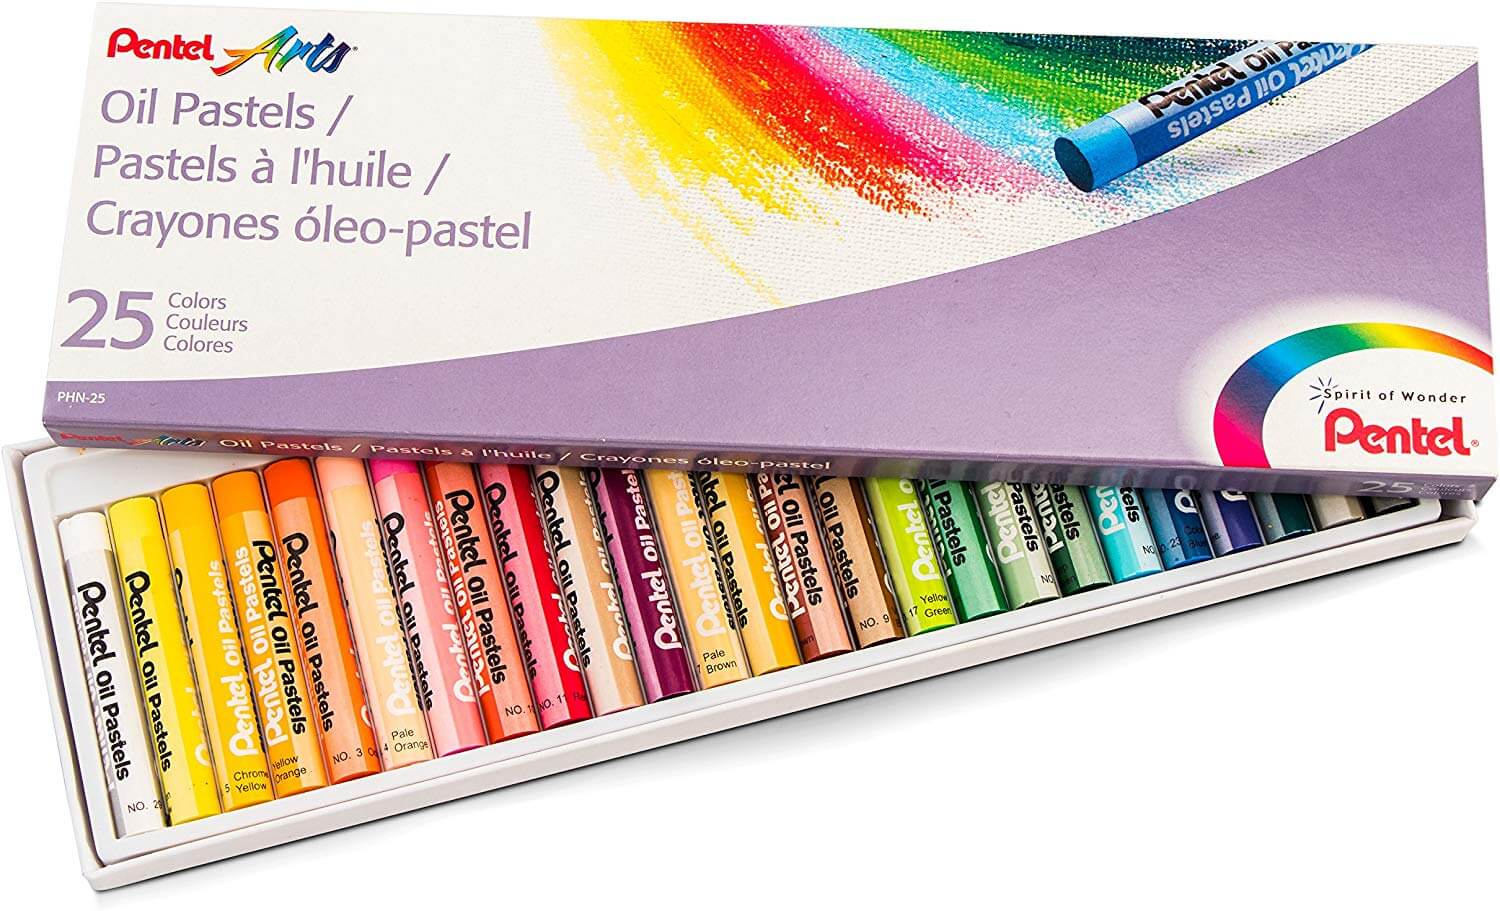 https://restylegraphic.com/wp-content/uploads/2019/09/Pentel-Arts-Oil-Pastel-Set-Assorted-Colors-Set-of-25.jpg